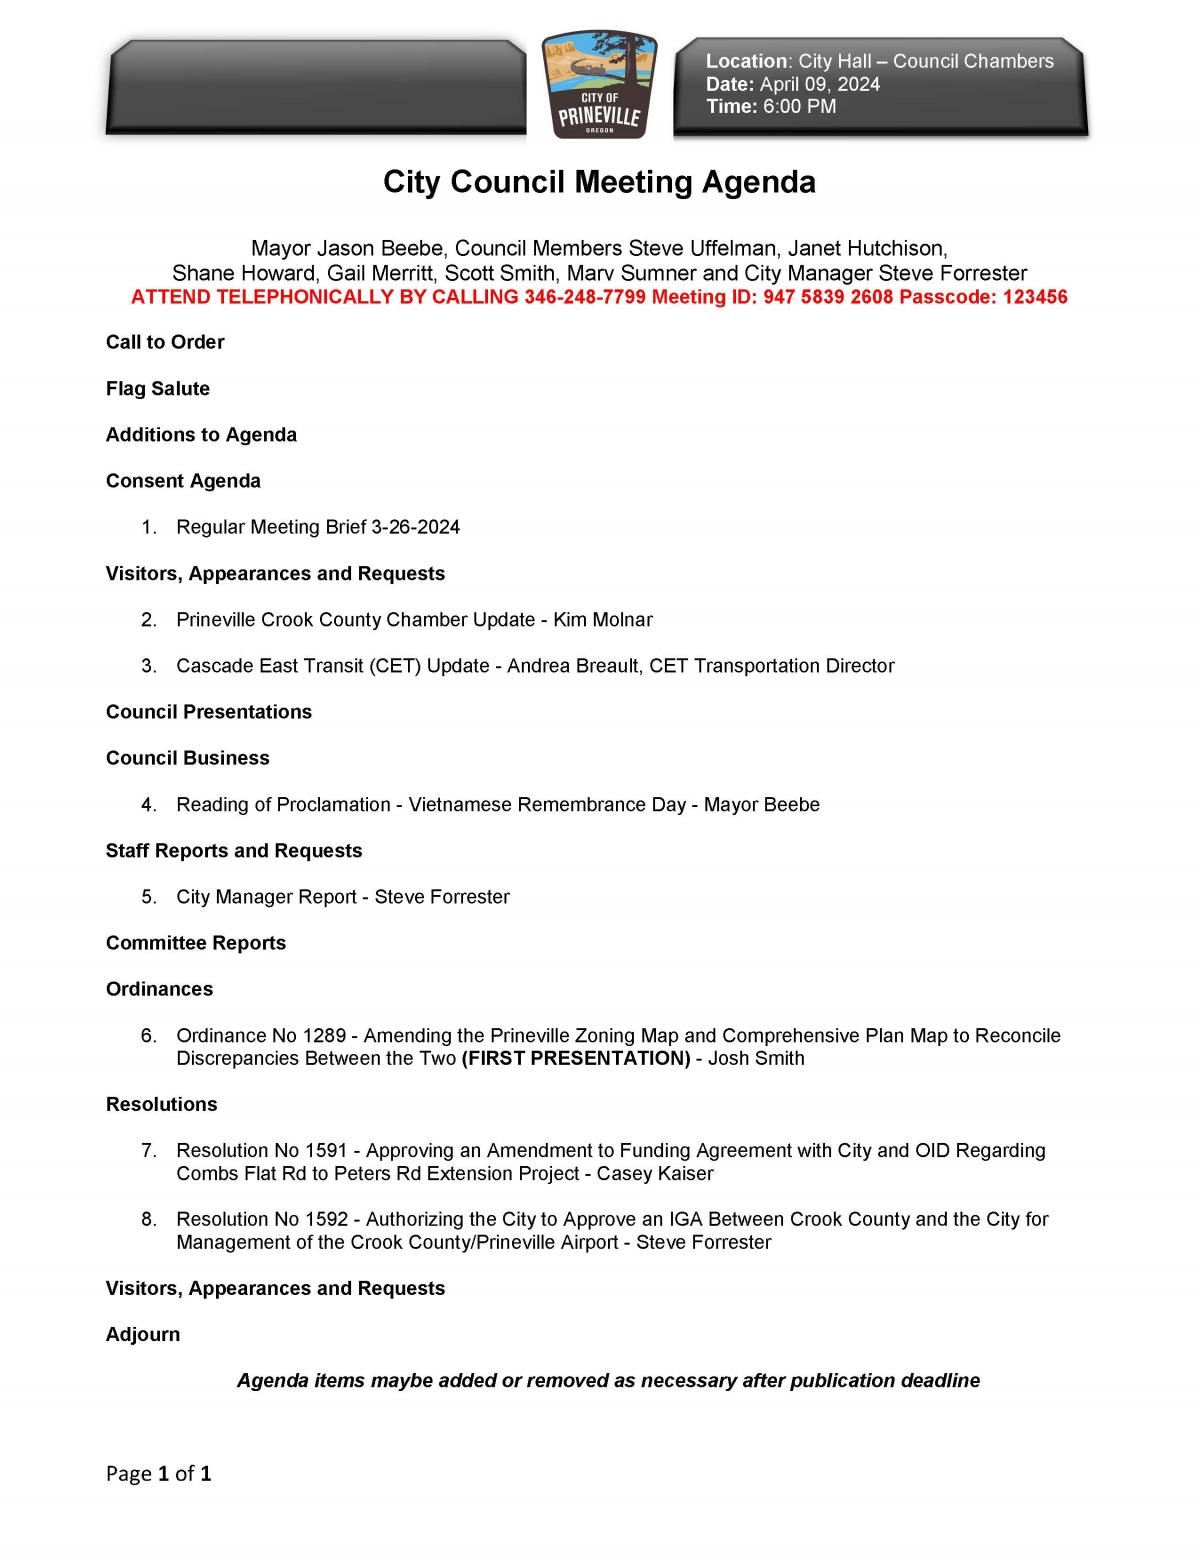 Council Agenda 4-9-2024